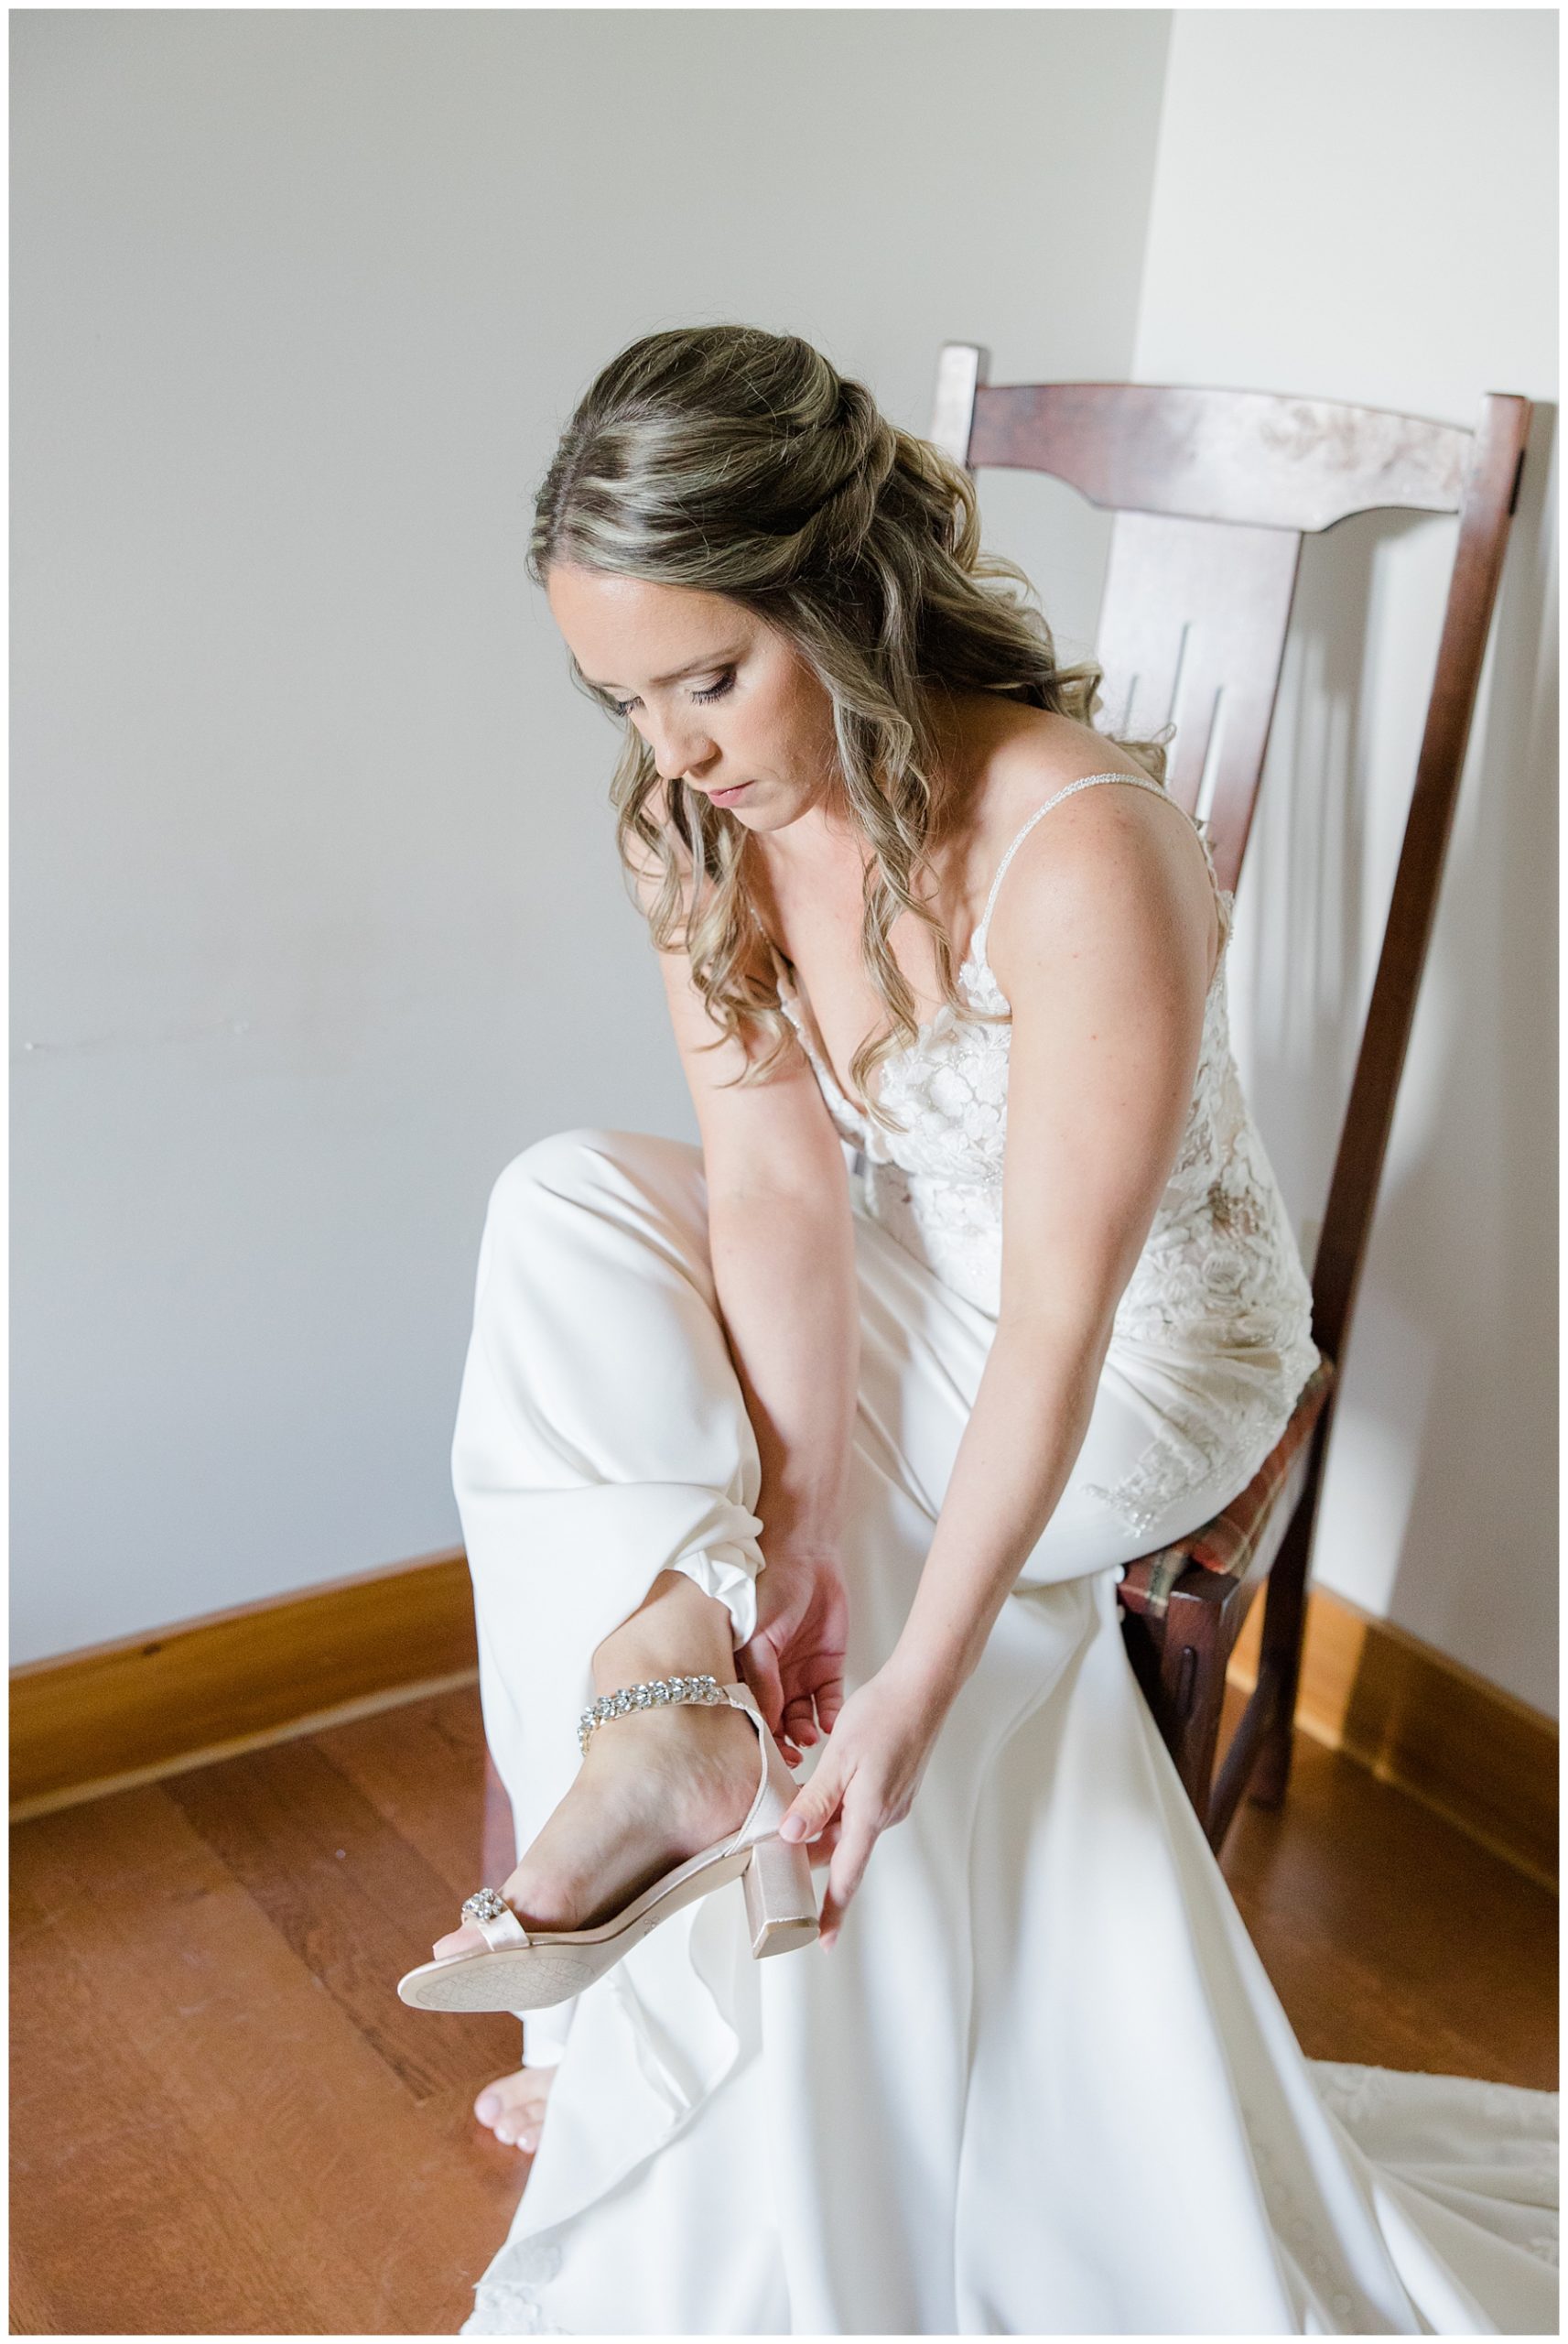 stunning bride puts on wedding shoes